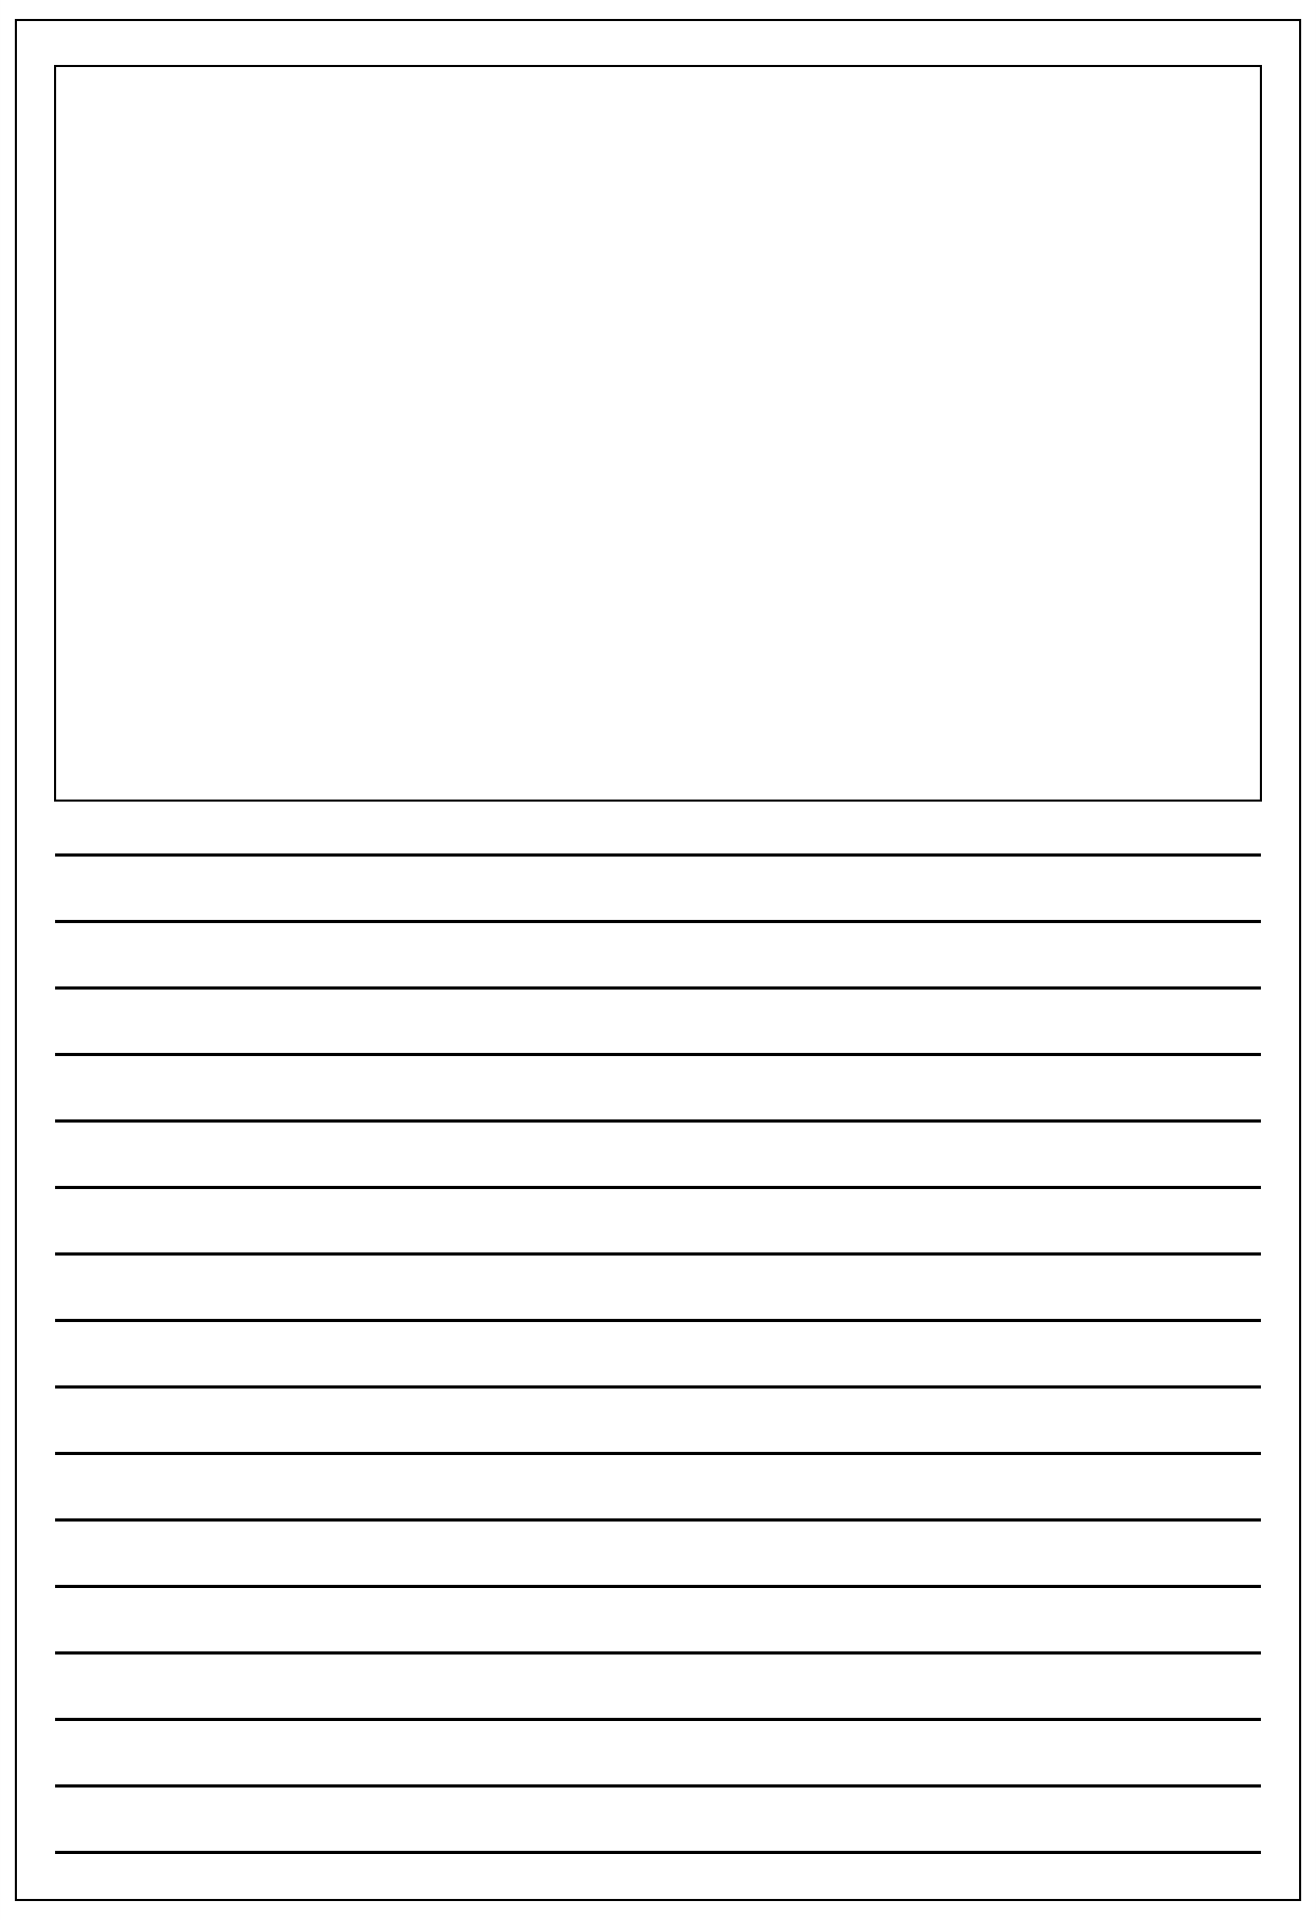 Free Printable Writing Sheets For Kindergarten